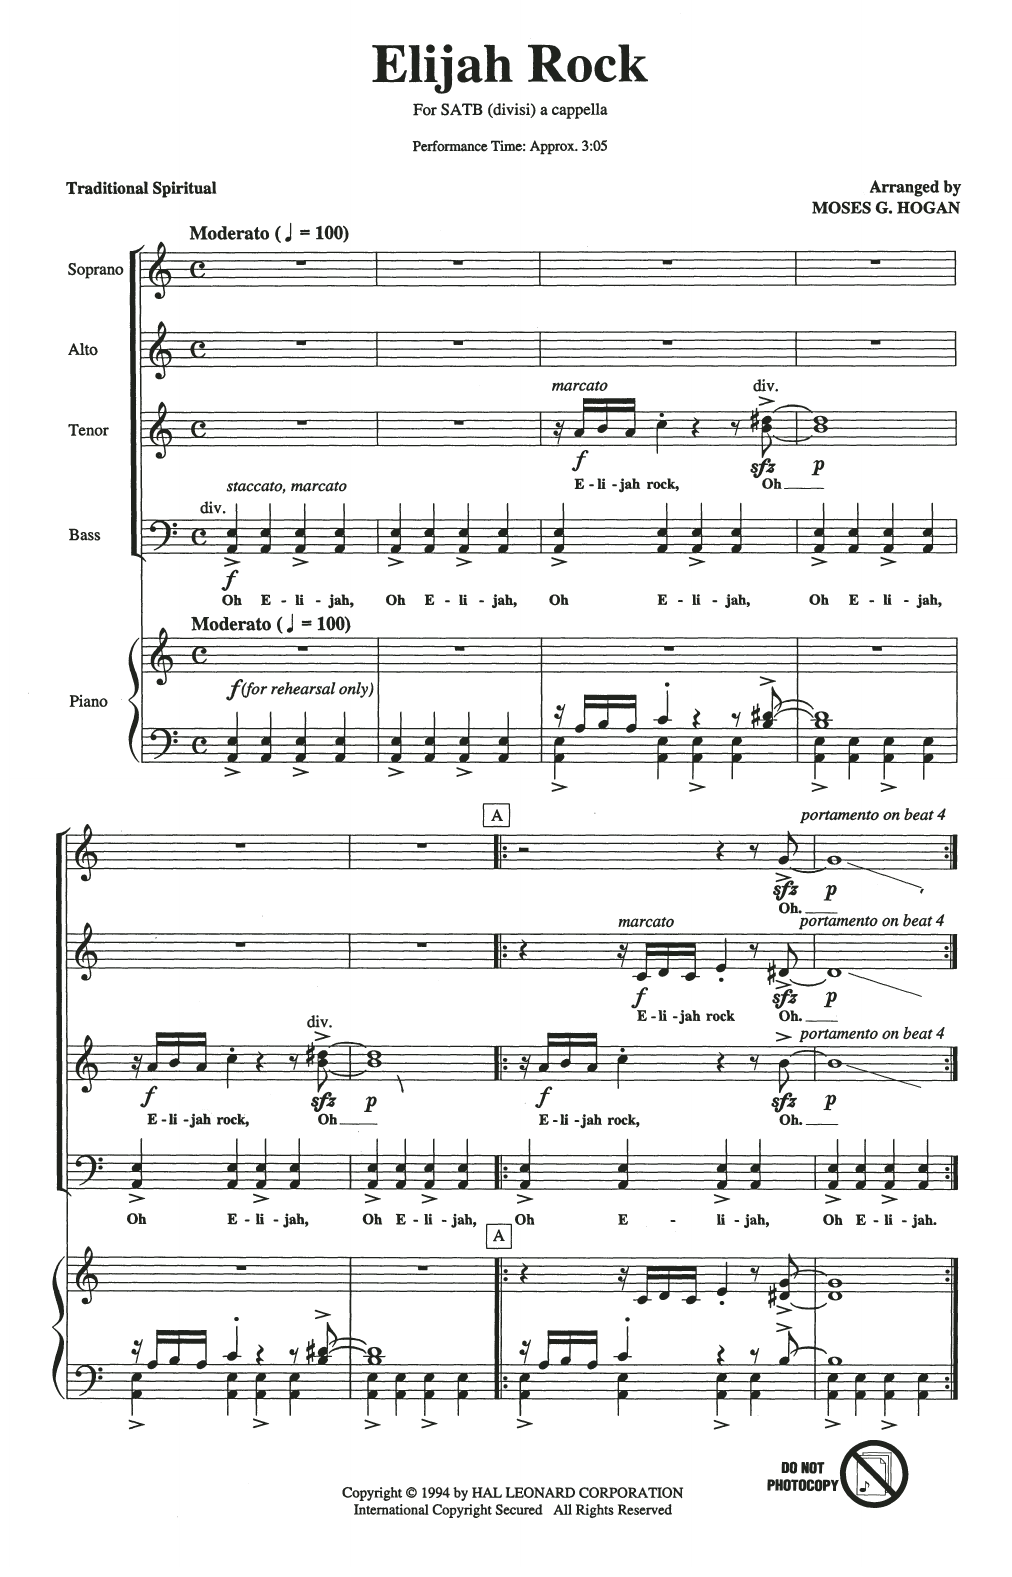 Traditional Spiritual Elijah Rock (arr. Moses Hogan) Sheet Music Notes & Chords for SATB Choir - Download or Print PDF